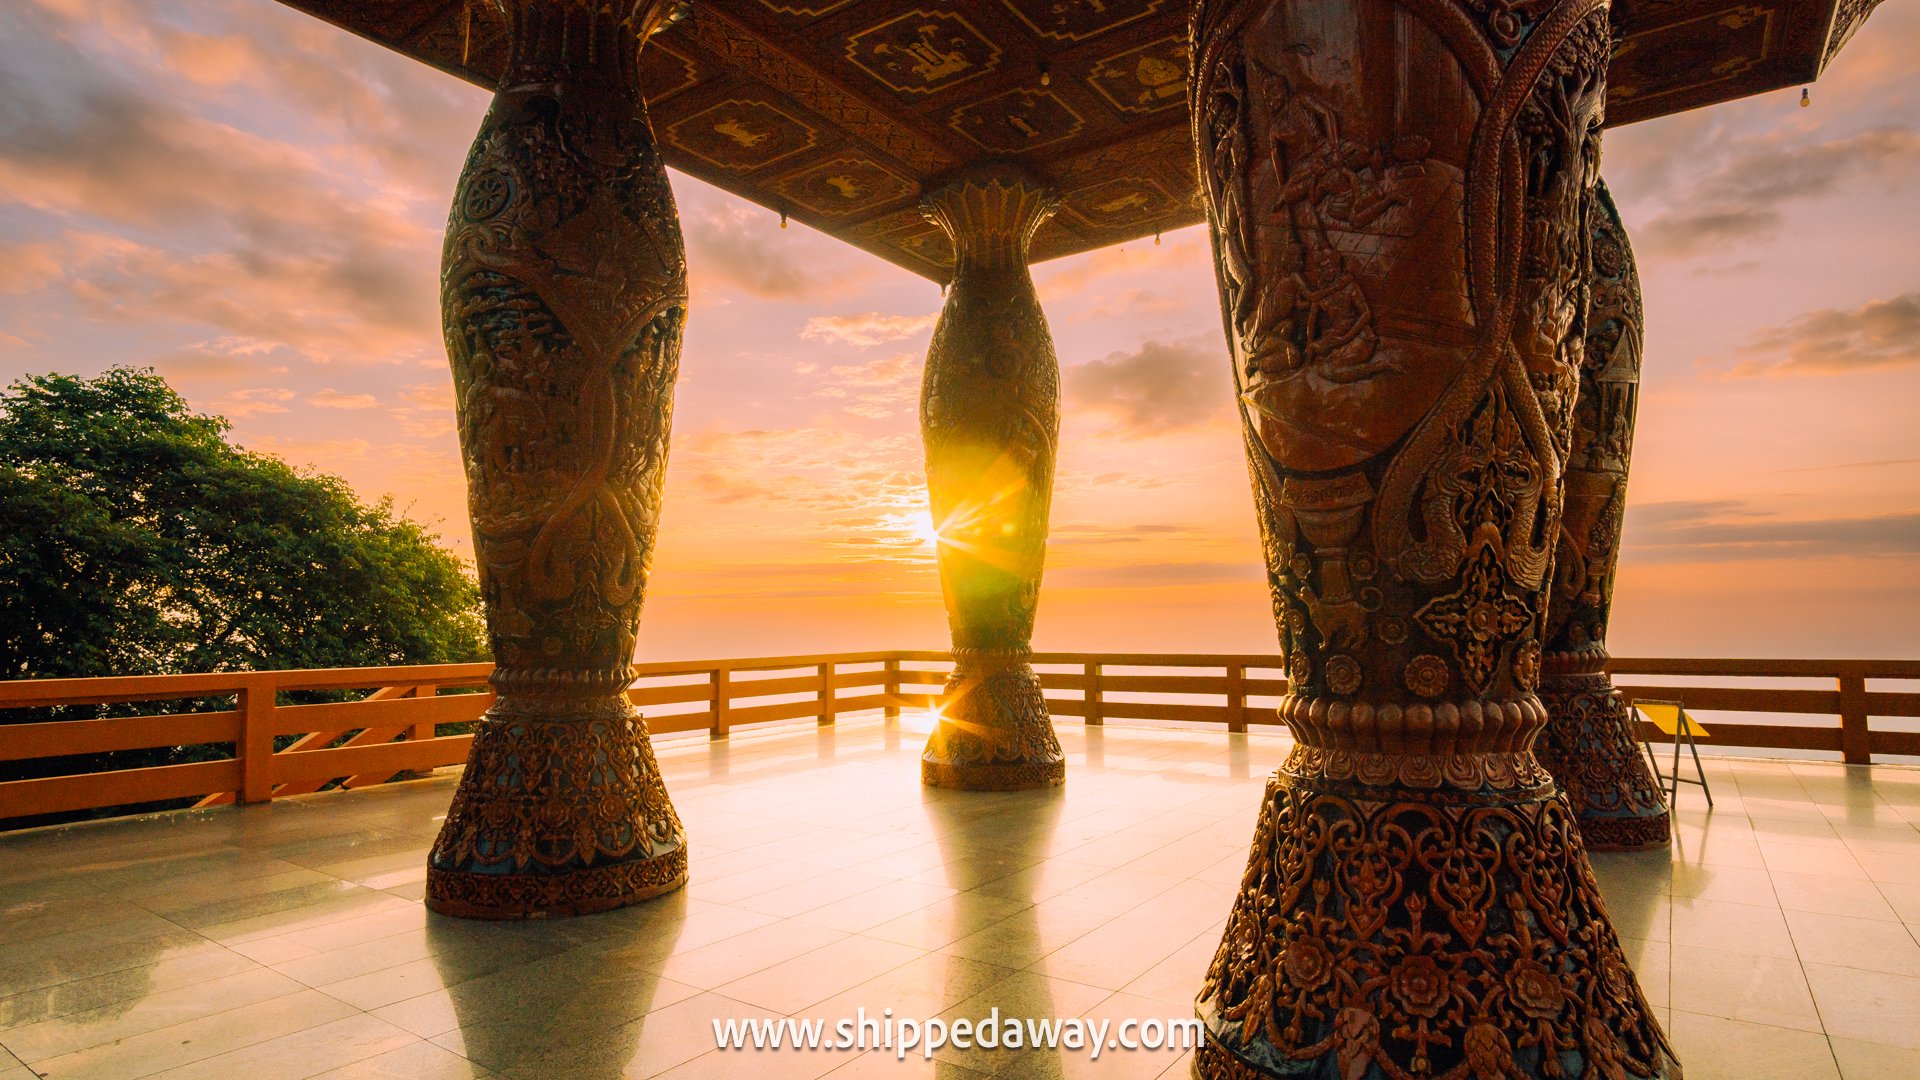 Watching sunrise at Wat Phra That Doi Suthep - Doi Suthep Temple Chiang Mai, Thailand - Travel Guide to Doi Suthep Temple